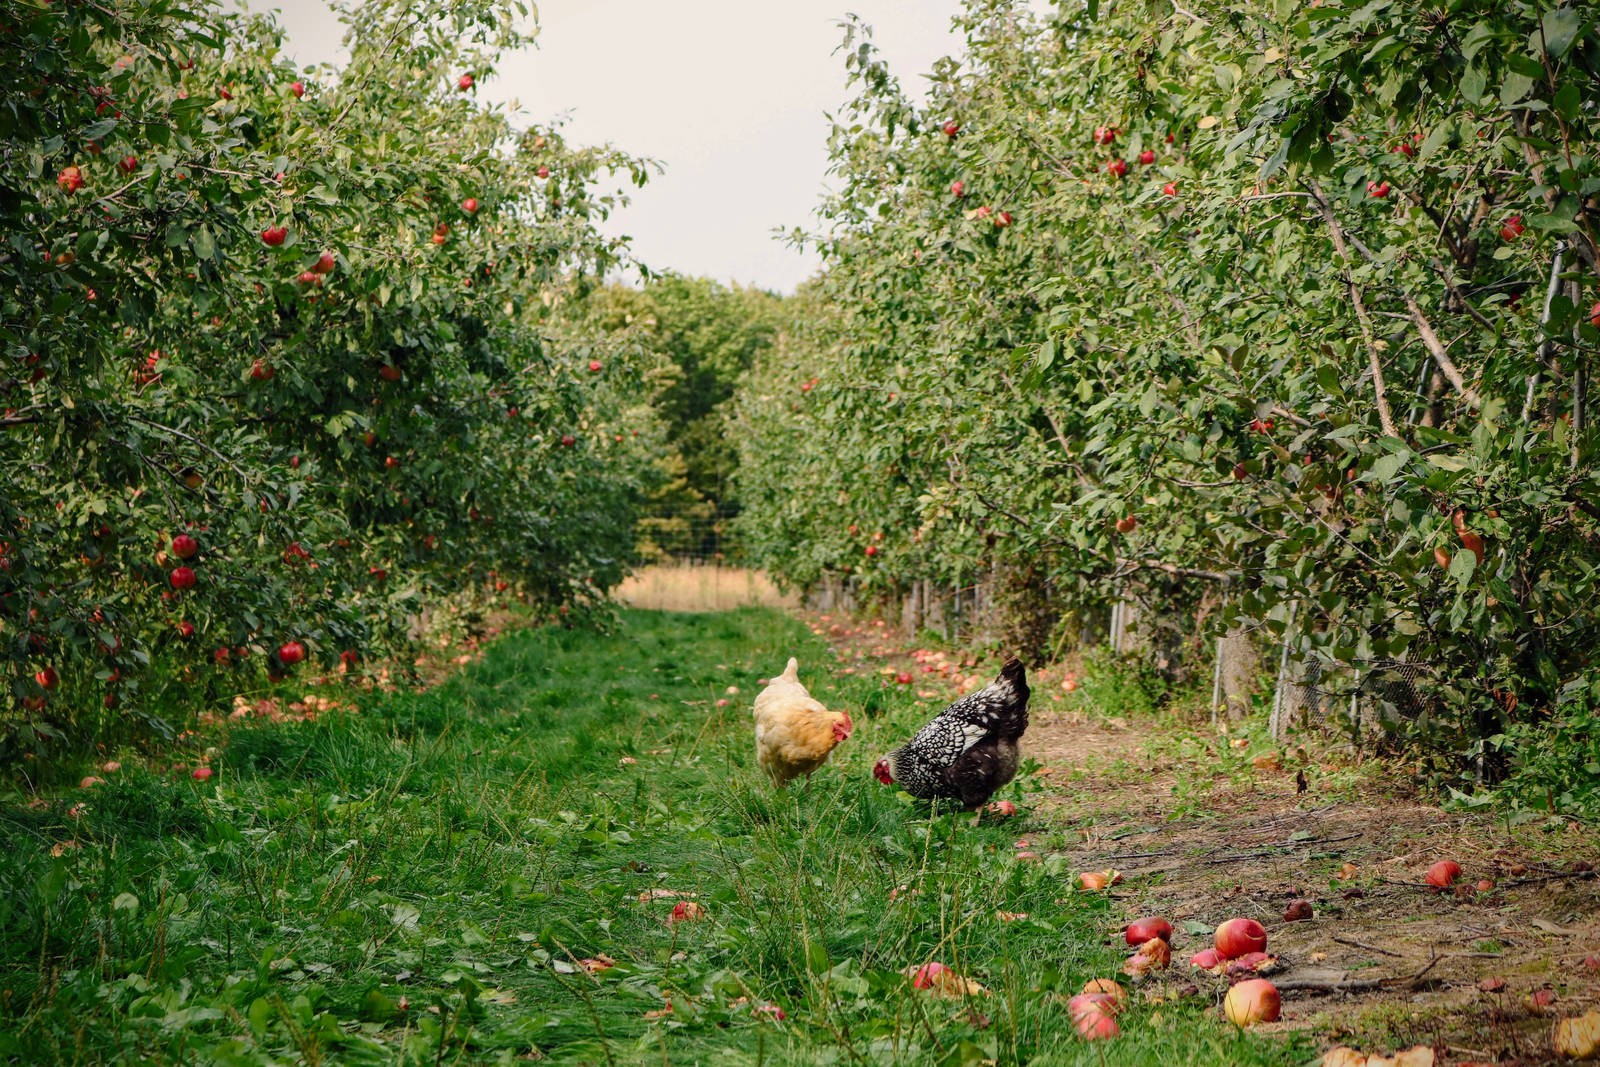 Permakultur: Apfelbäume und Hühner